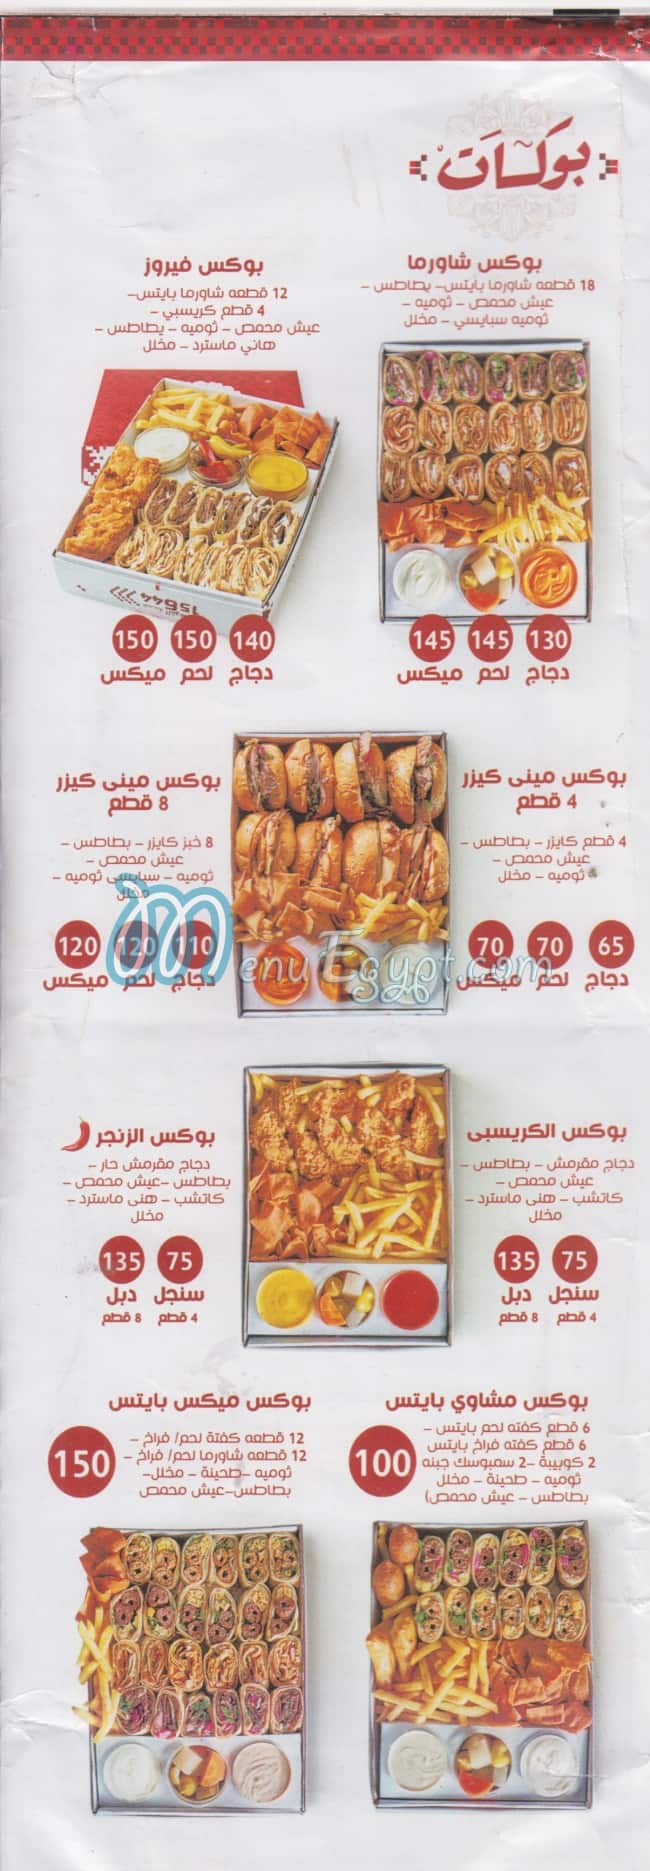 Fayrouz Grill menu Egypt 1